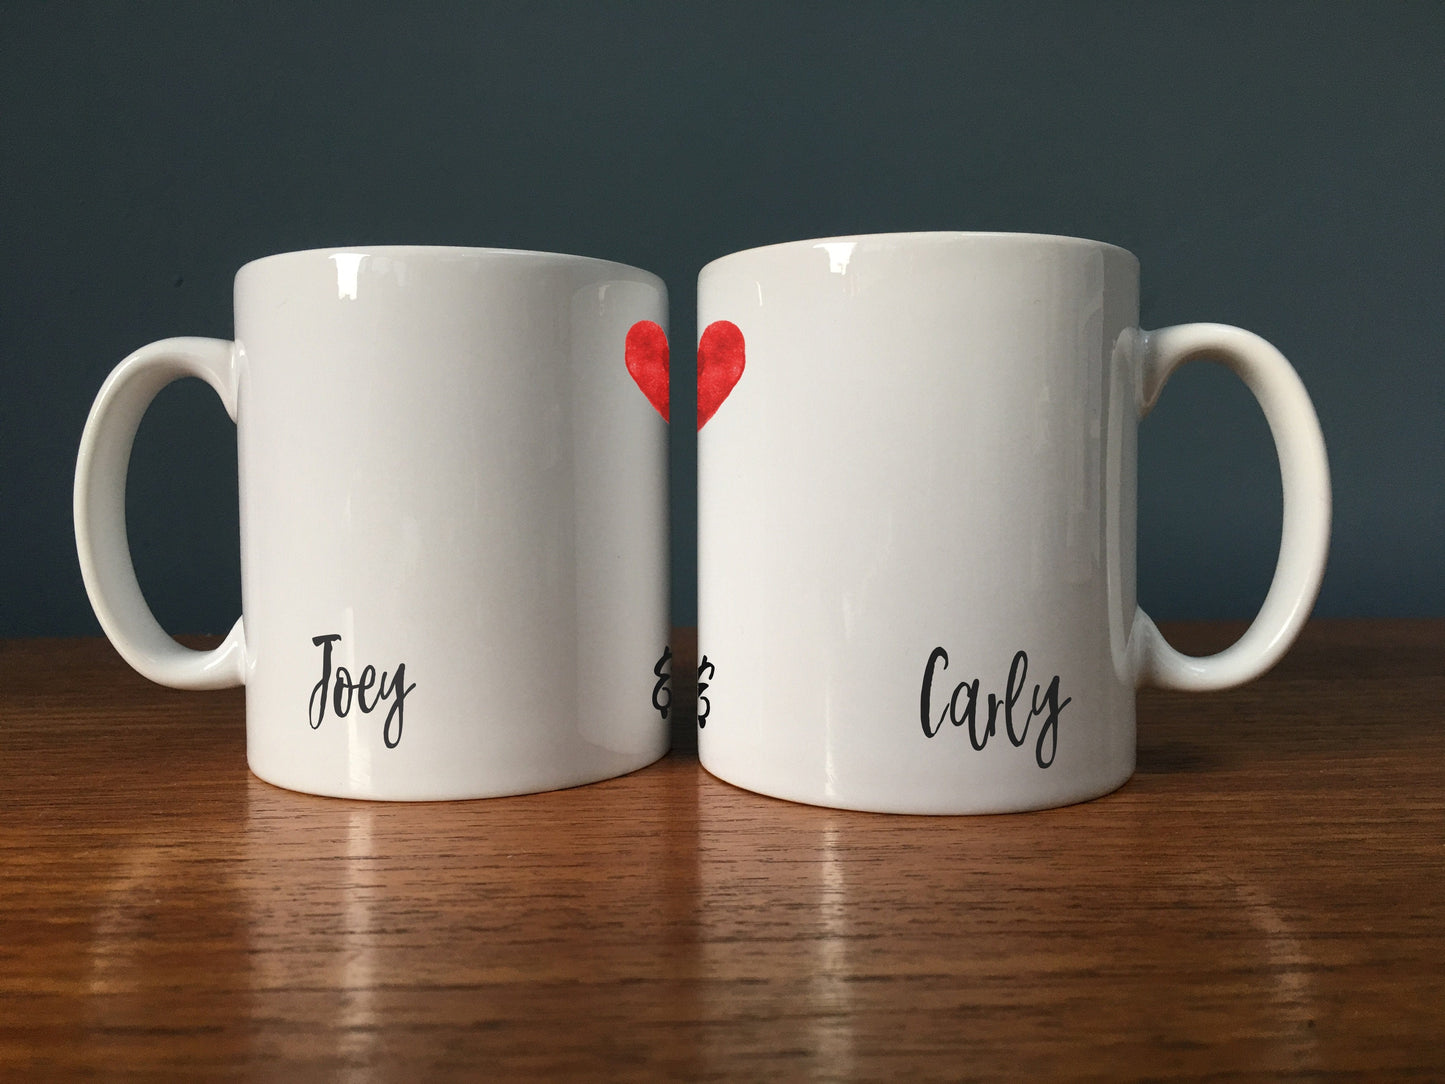 Friends Inspired Gift - 'He's Her Lobster' Personalised Mug Set - Instagram Ready For Life Partner